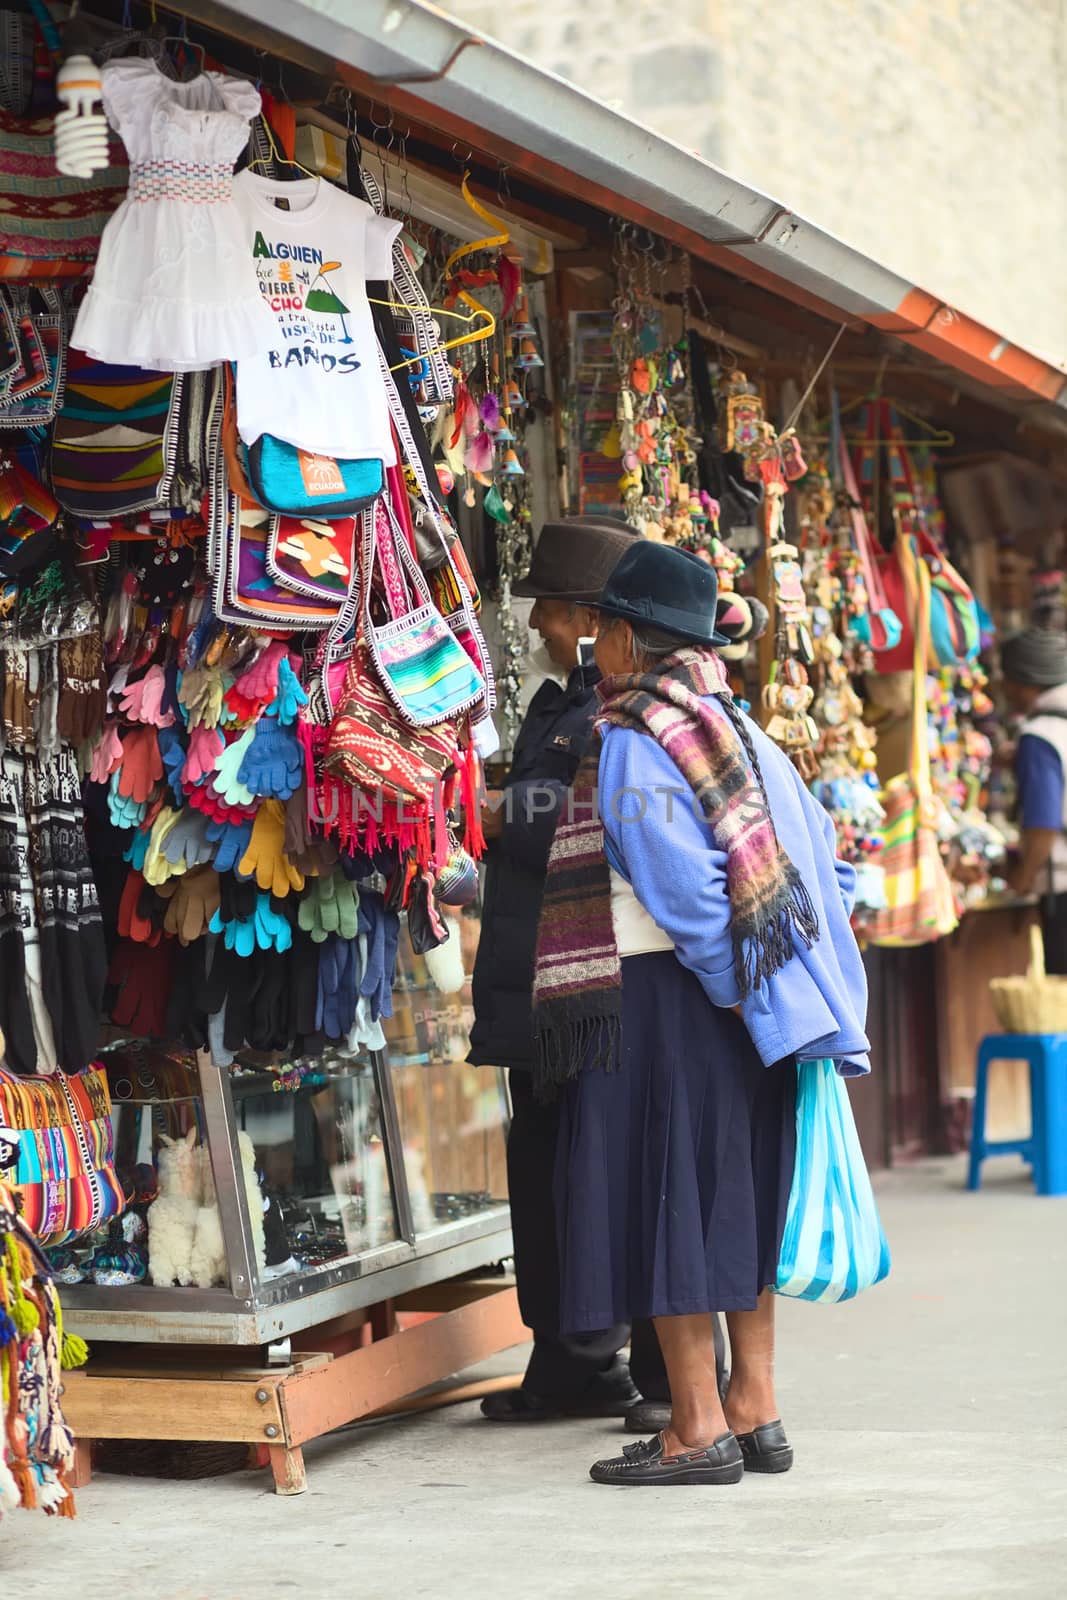 People at Handicraft Stand in Banos, Ecuador by ildi